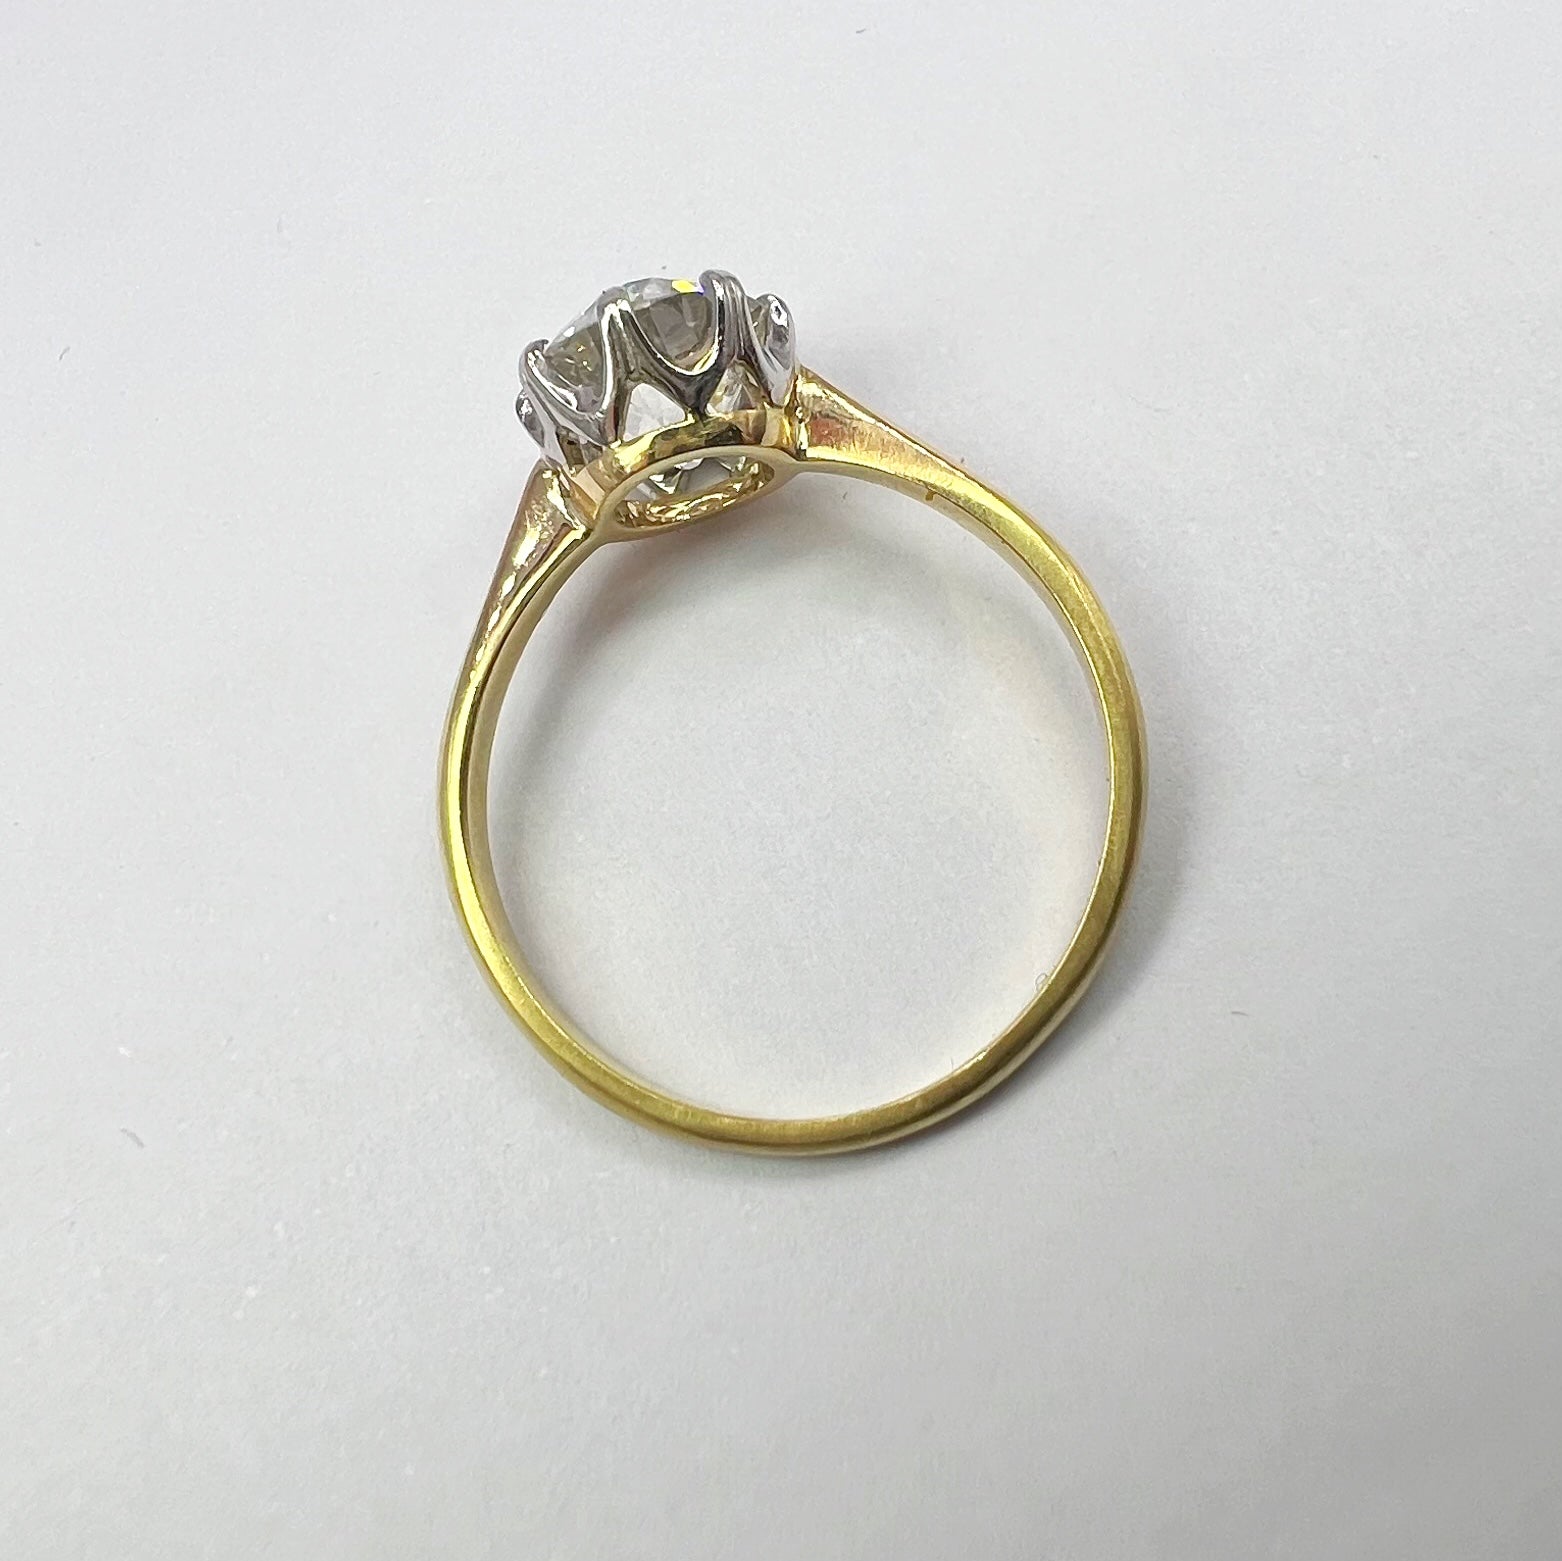 1.62ct Old European Cut Diamond Solitaire Ring